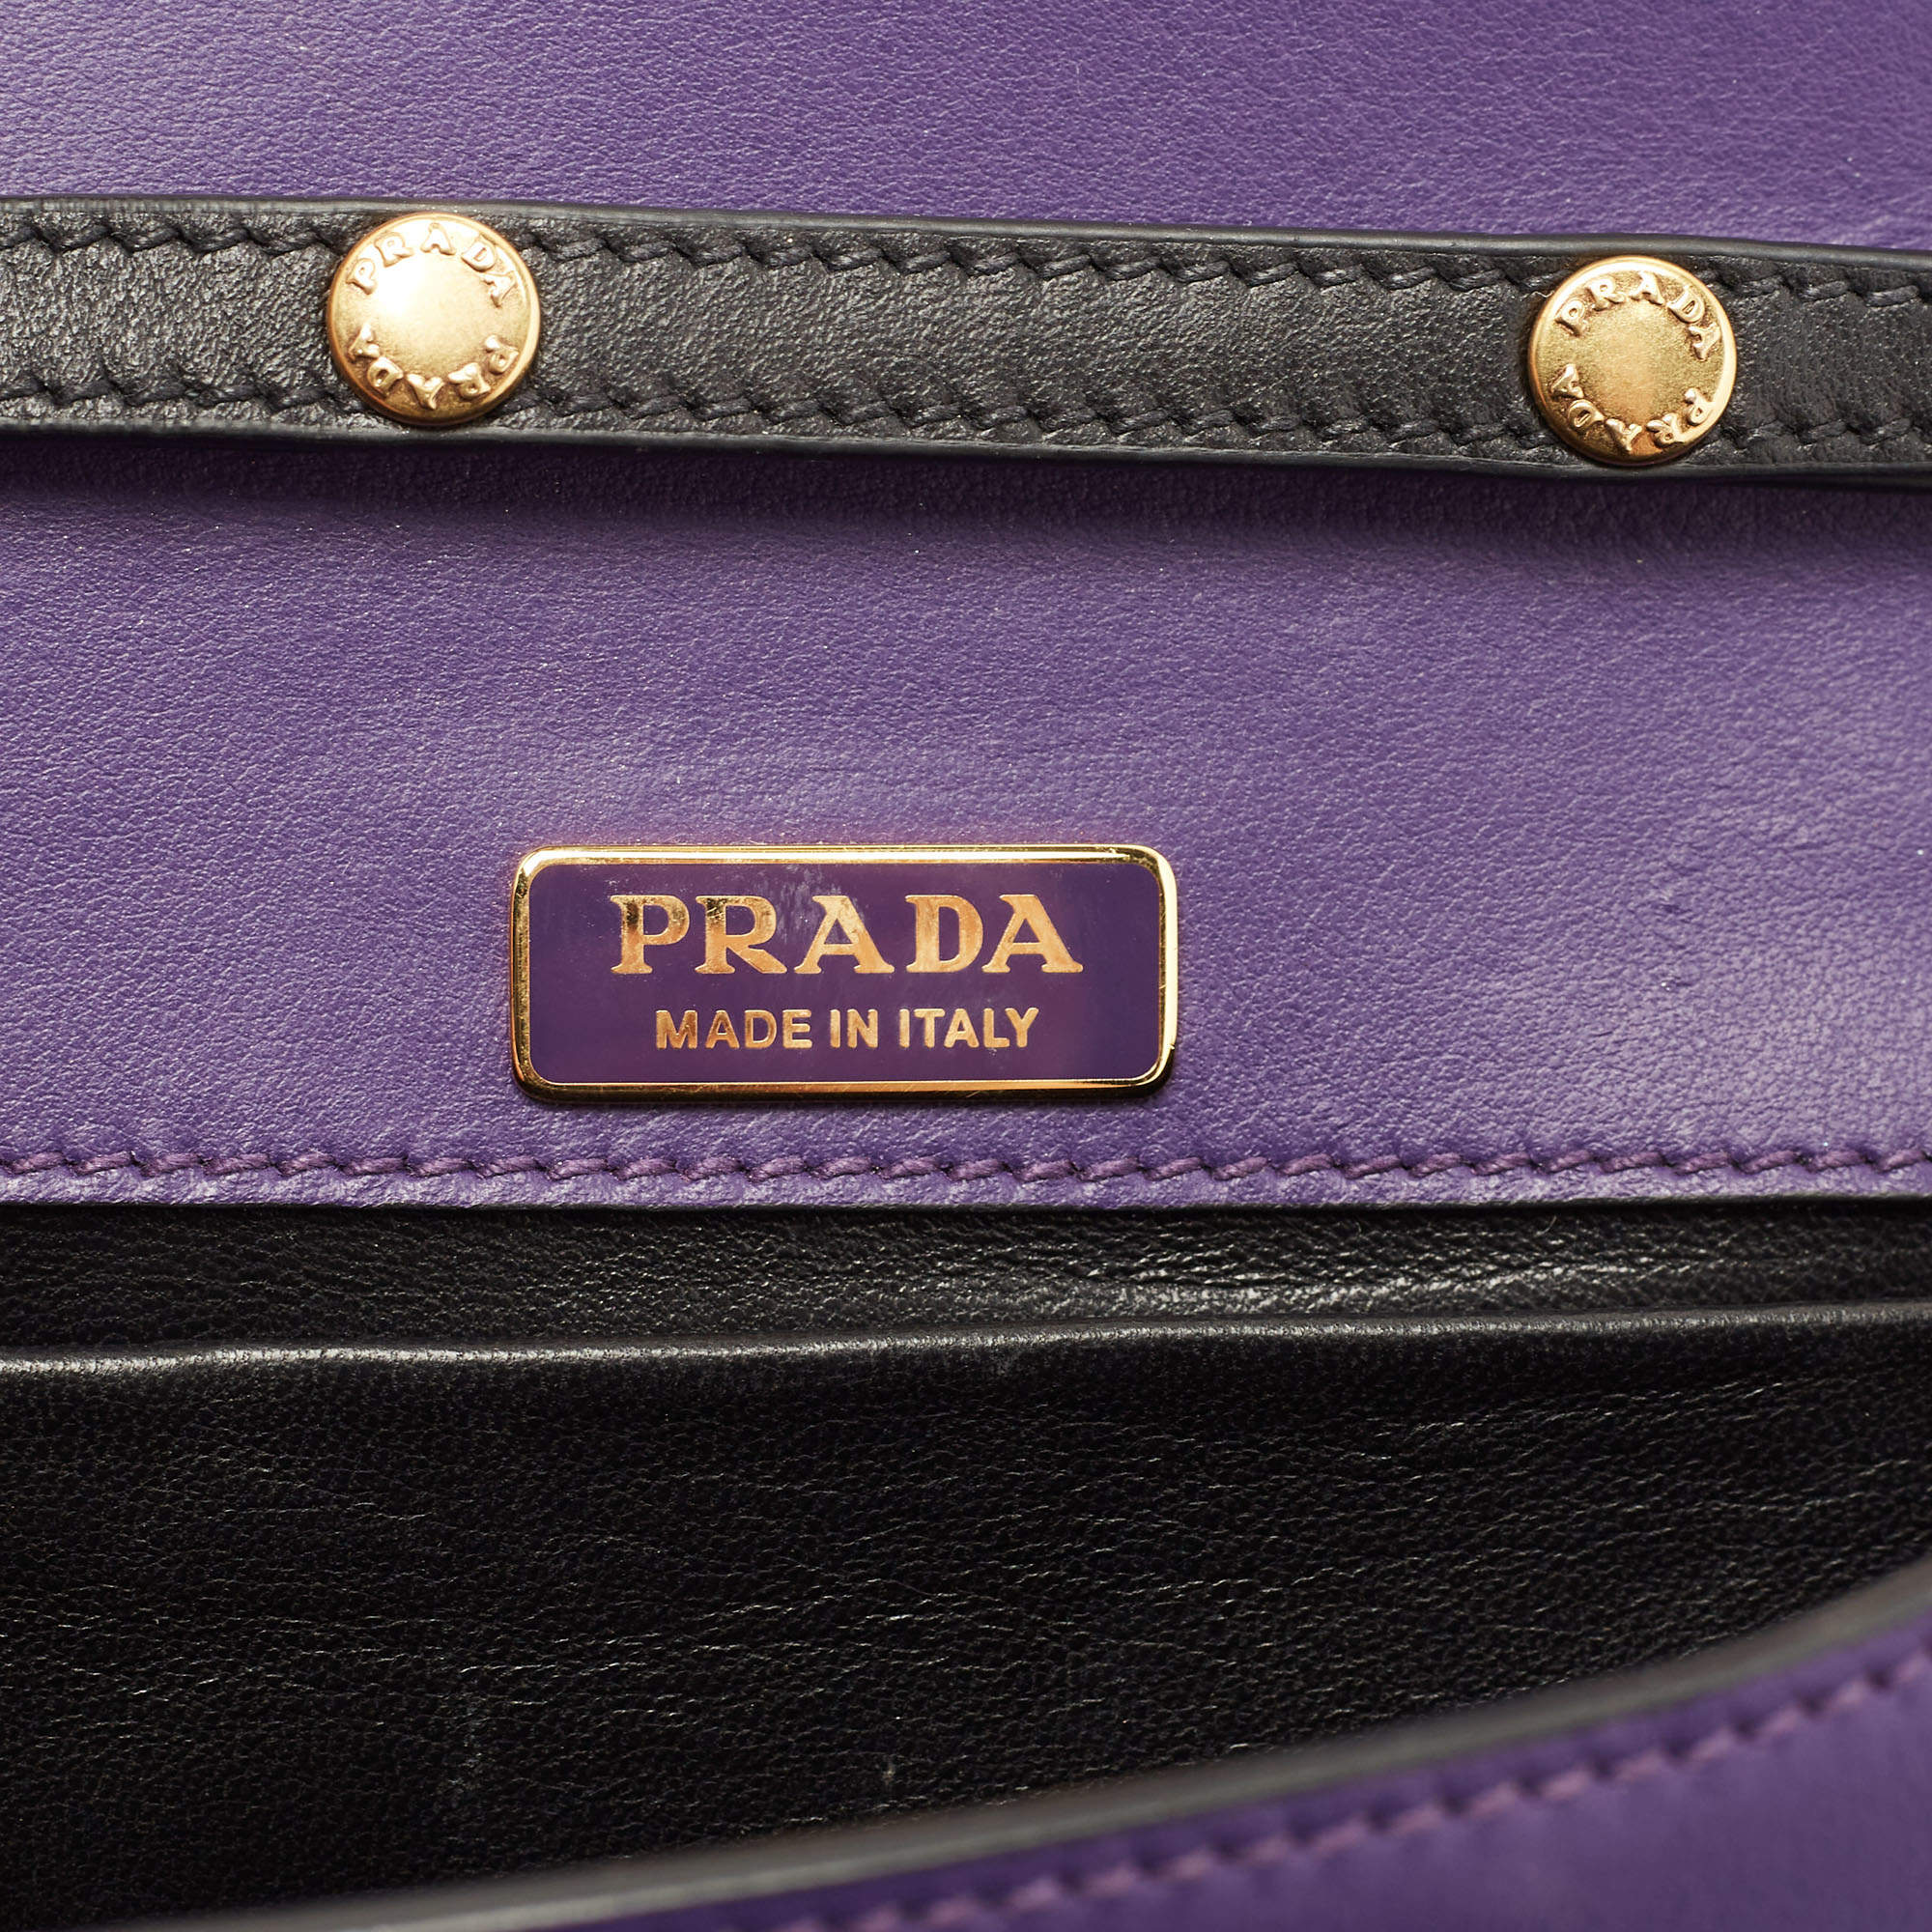 Prada Purple Saffiano and Leather Astrology Celestial Cahier Crossbody Bag